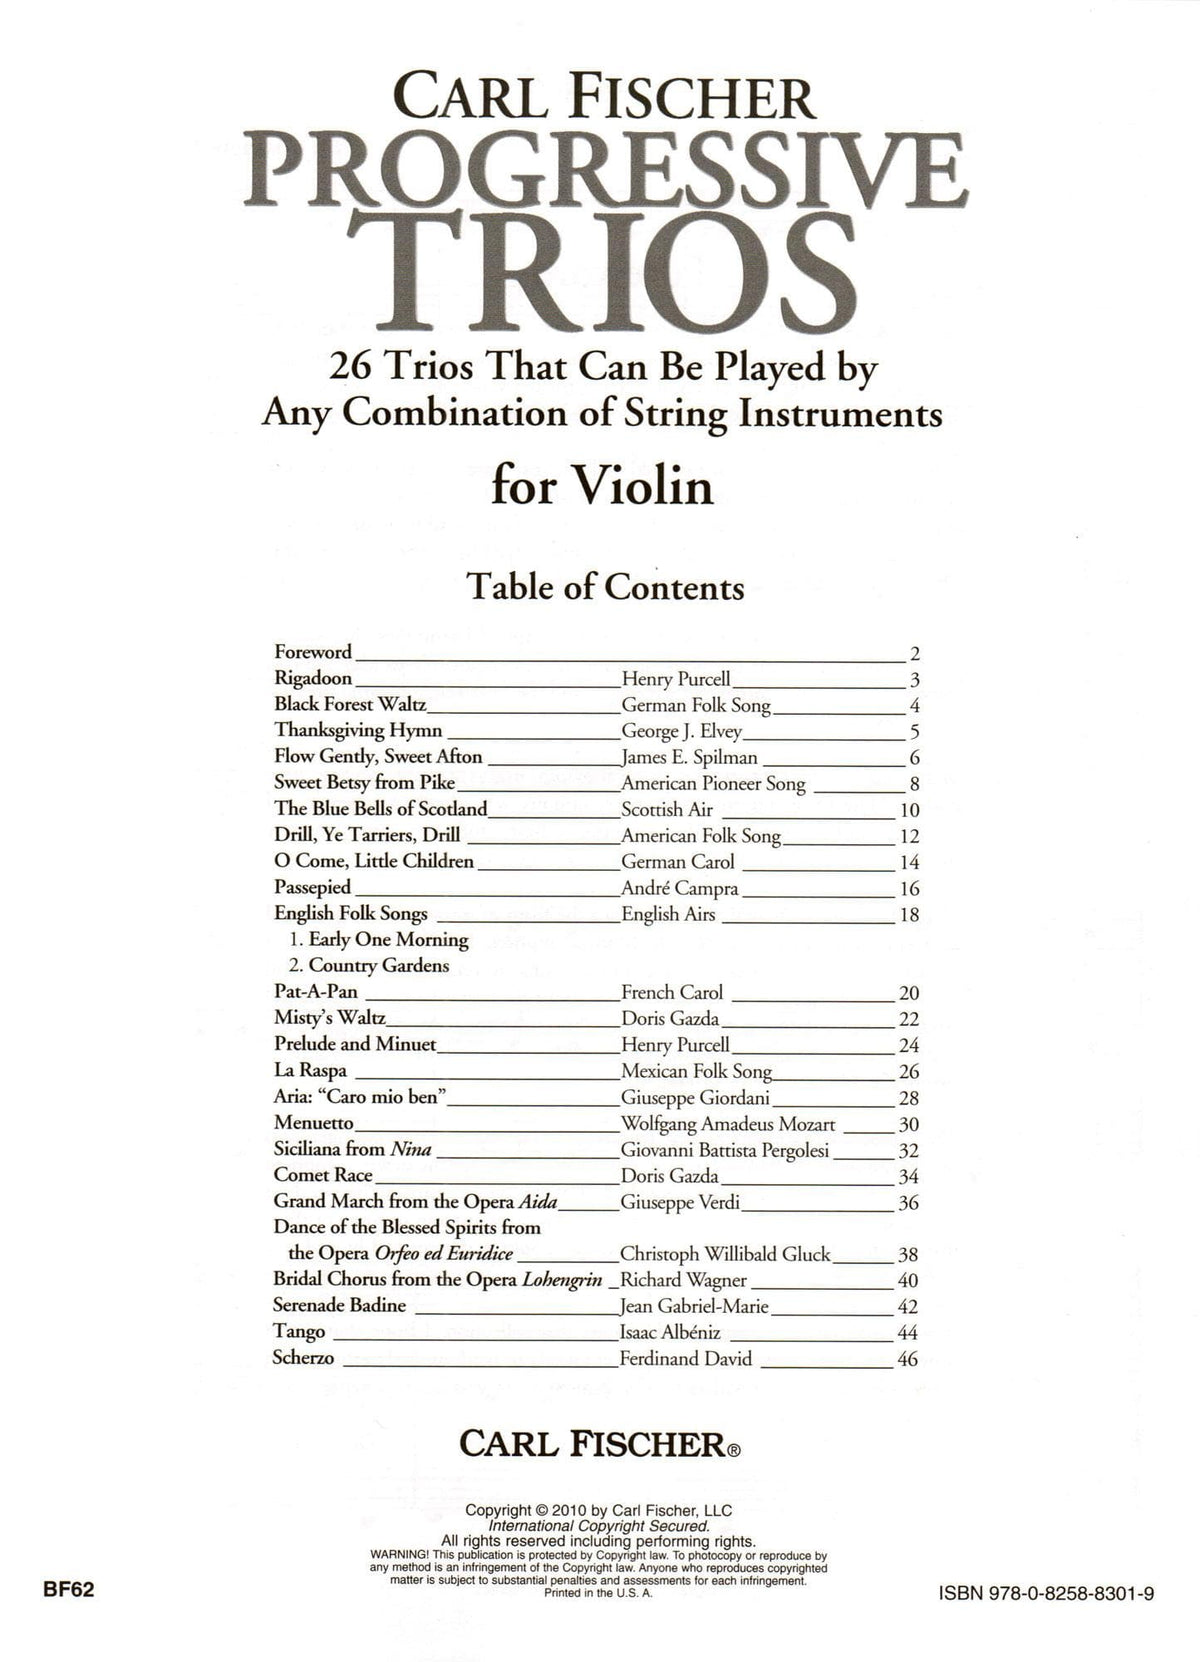 Progressive Trios for Violin - 26 Trios for Any Combination of Stringed Instruments - Arranged by Doris Gazda - Carl Fischer Publication